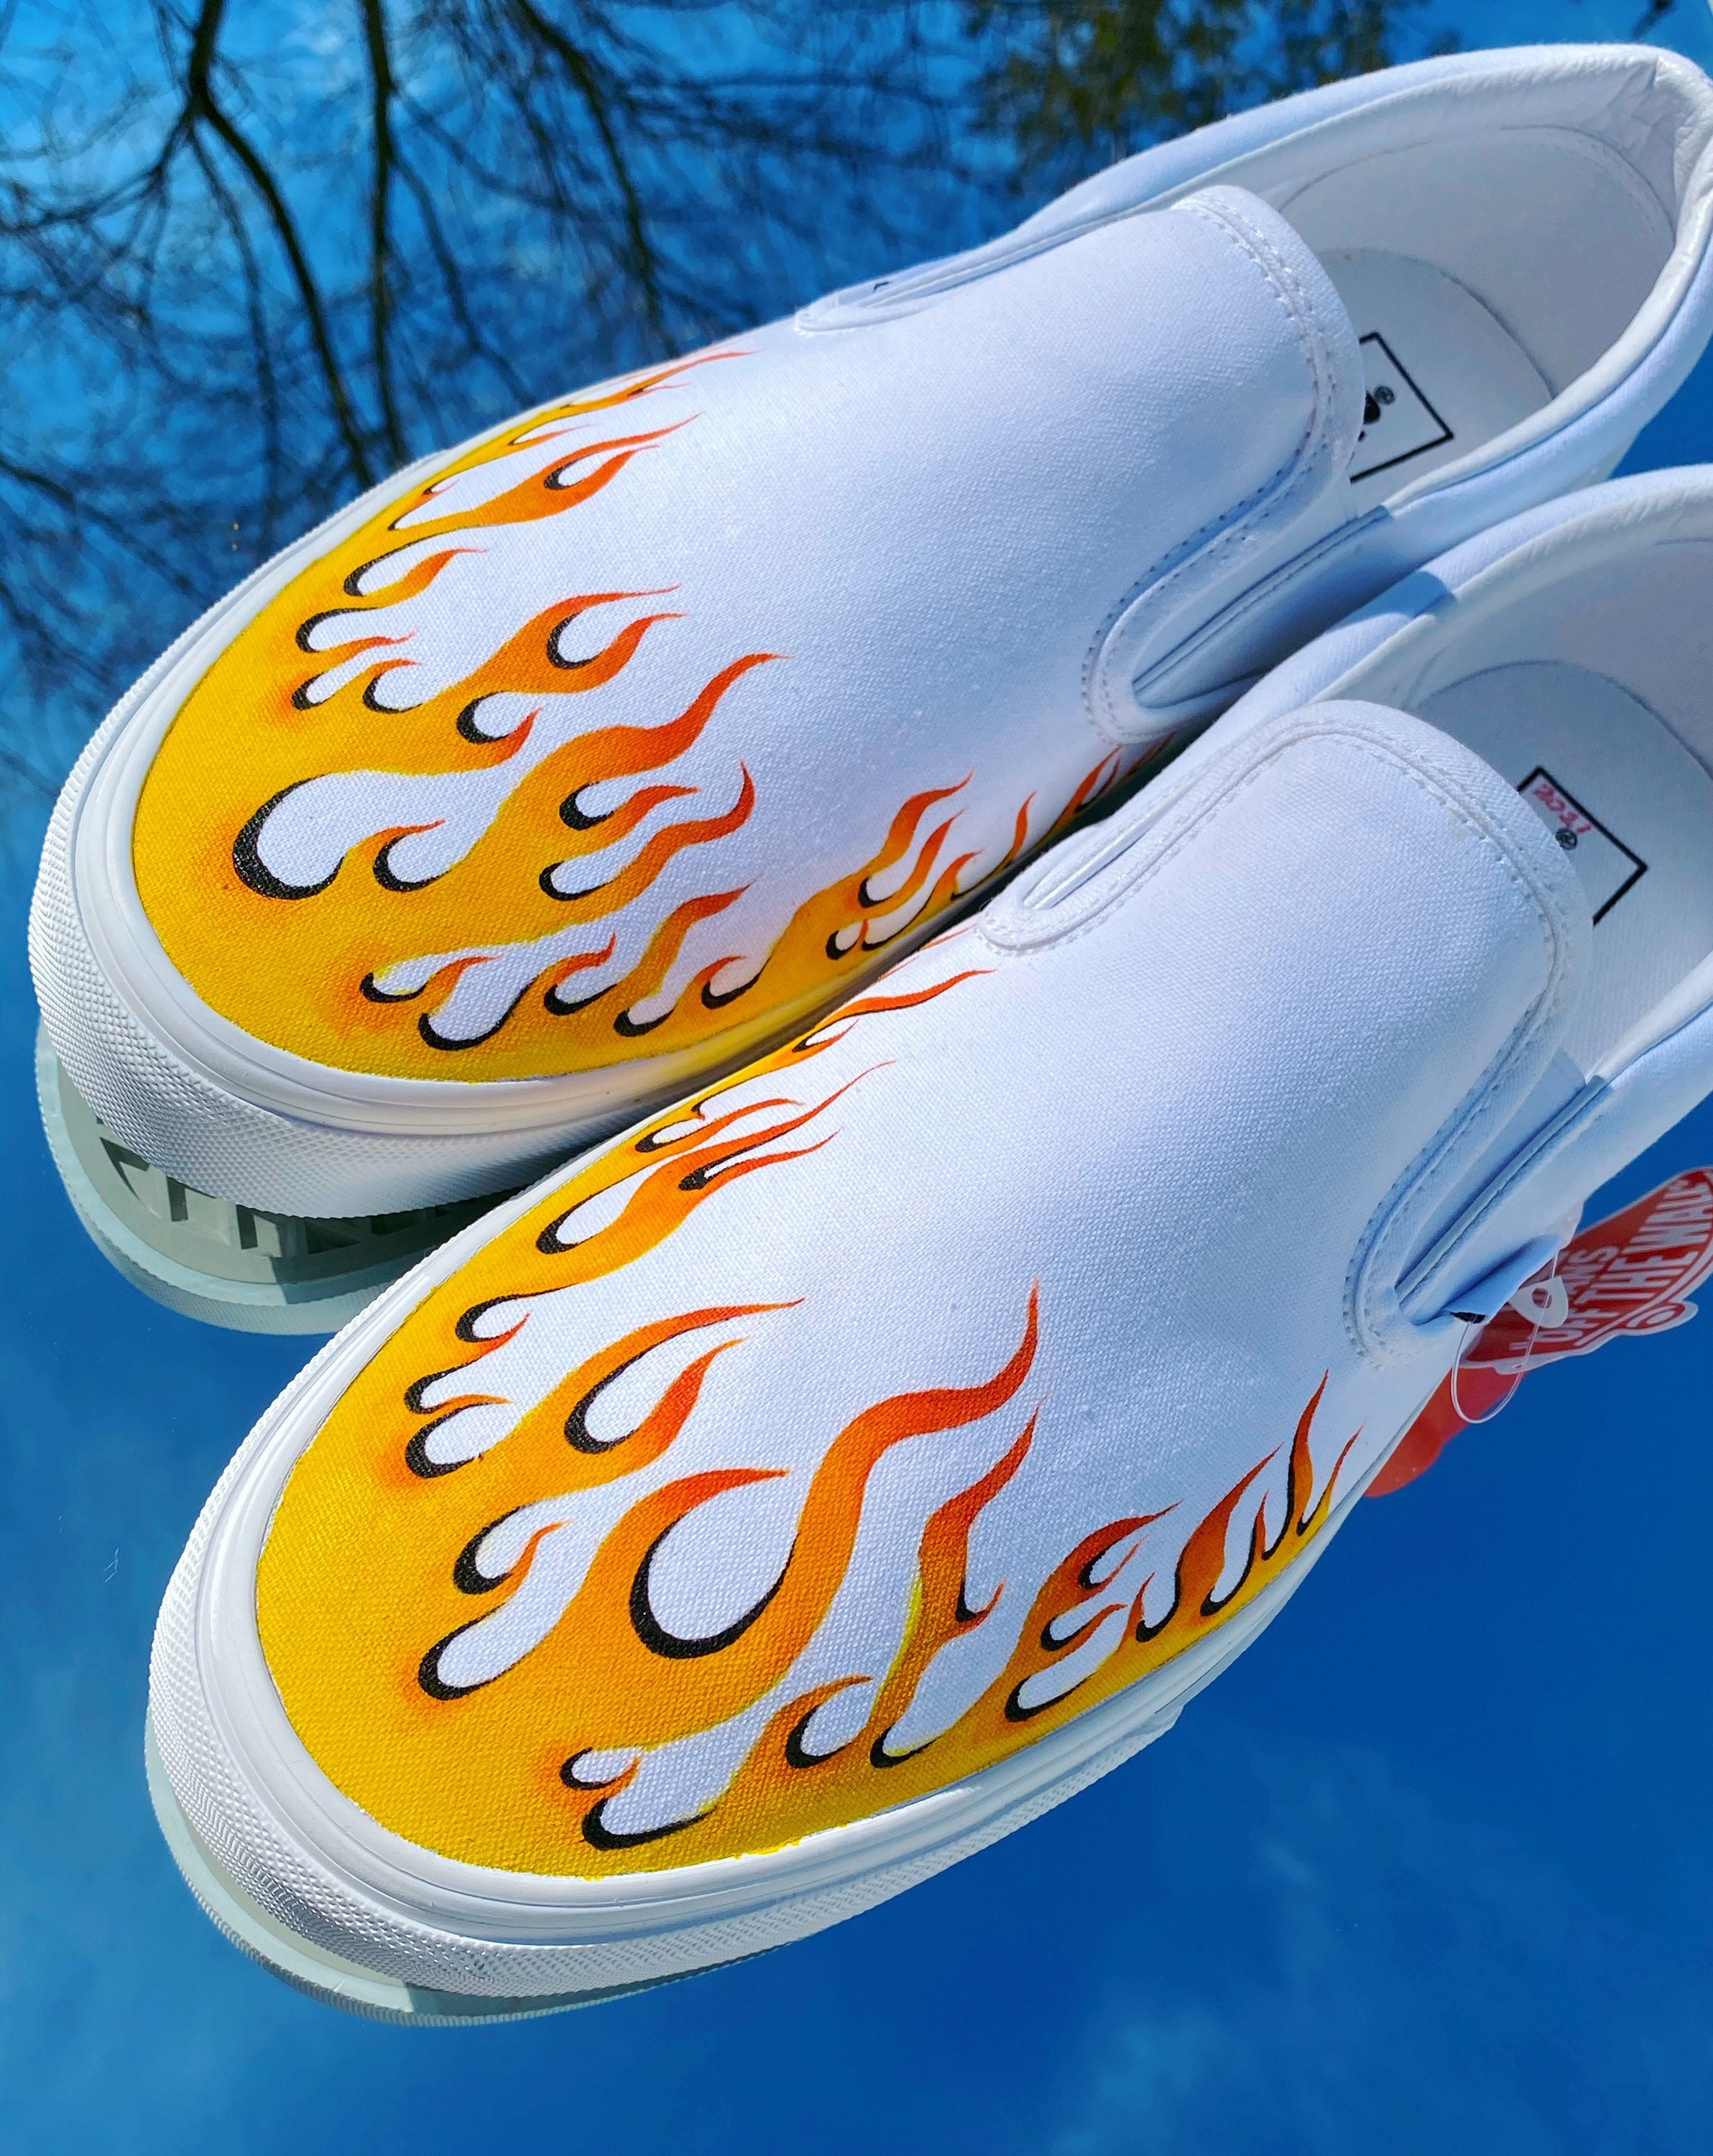 FLAME VANS Custom Hand-Painted Ombré Flame Vans Slip-On Fire | Etsy